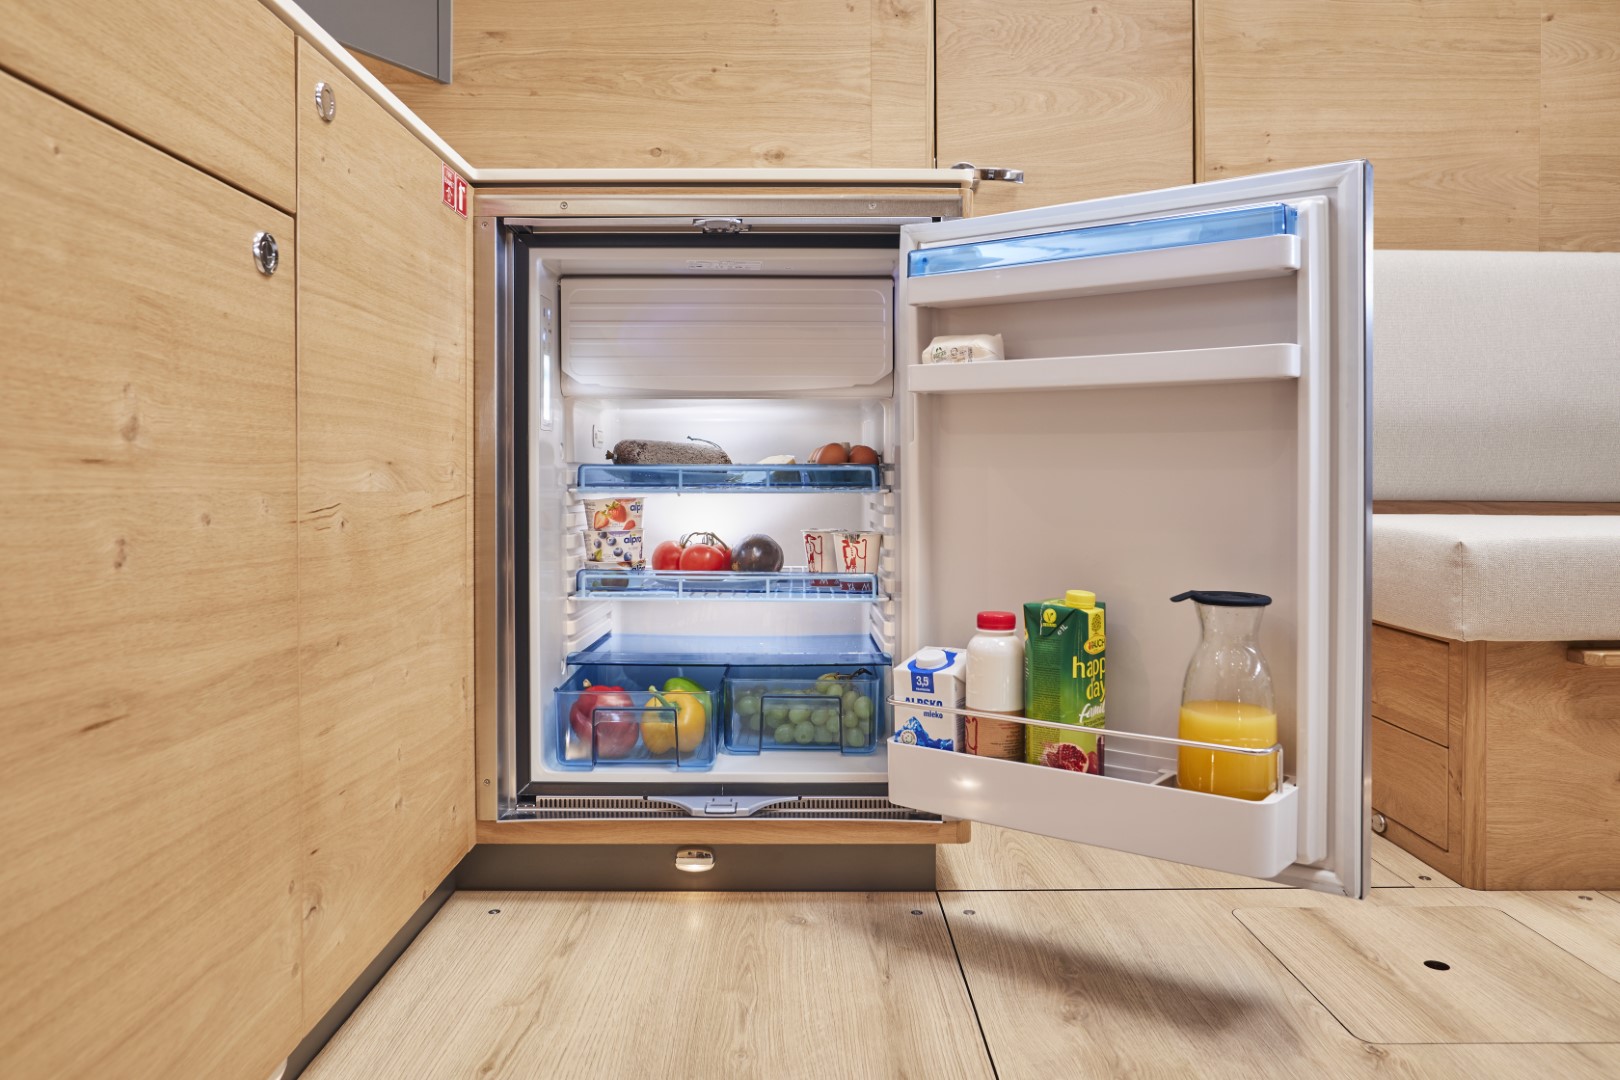 Elan Impression 43 - open refrigerator